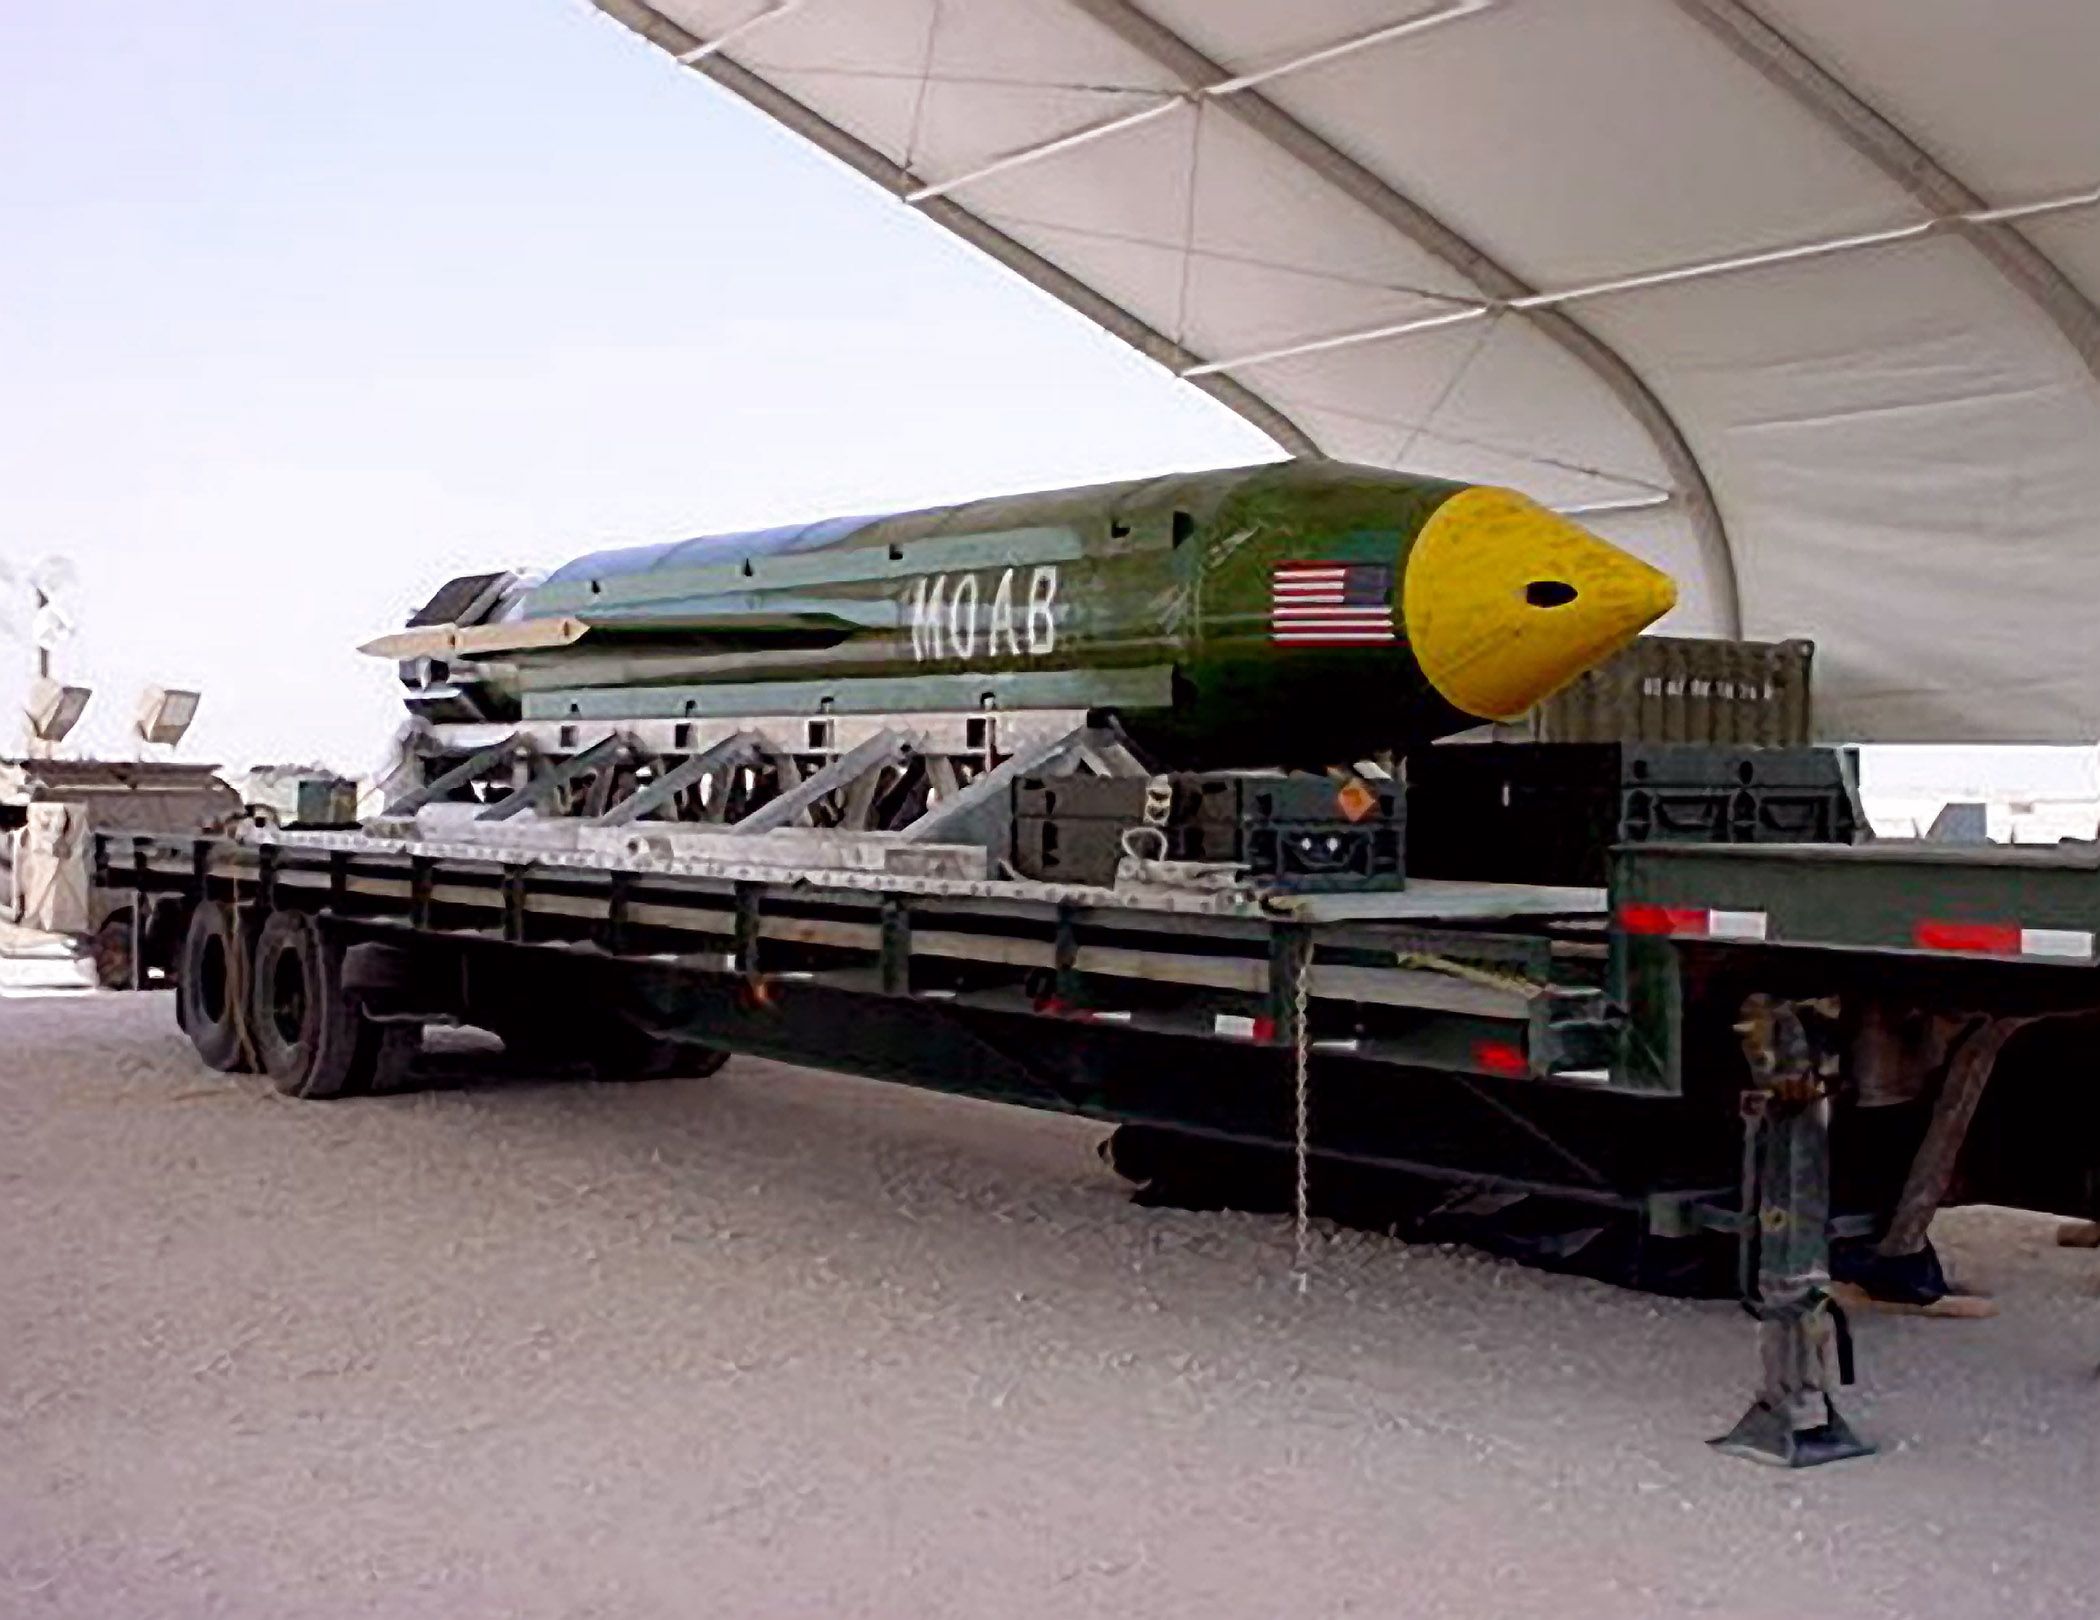 Мать всех бомб. GBU-43/B massive Ordnance Air Blast. GBU-43/B Moab. Взрыв GBU-43/B Moab. GBU-22 бомба.